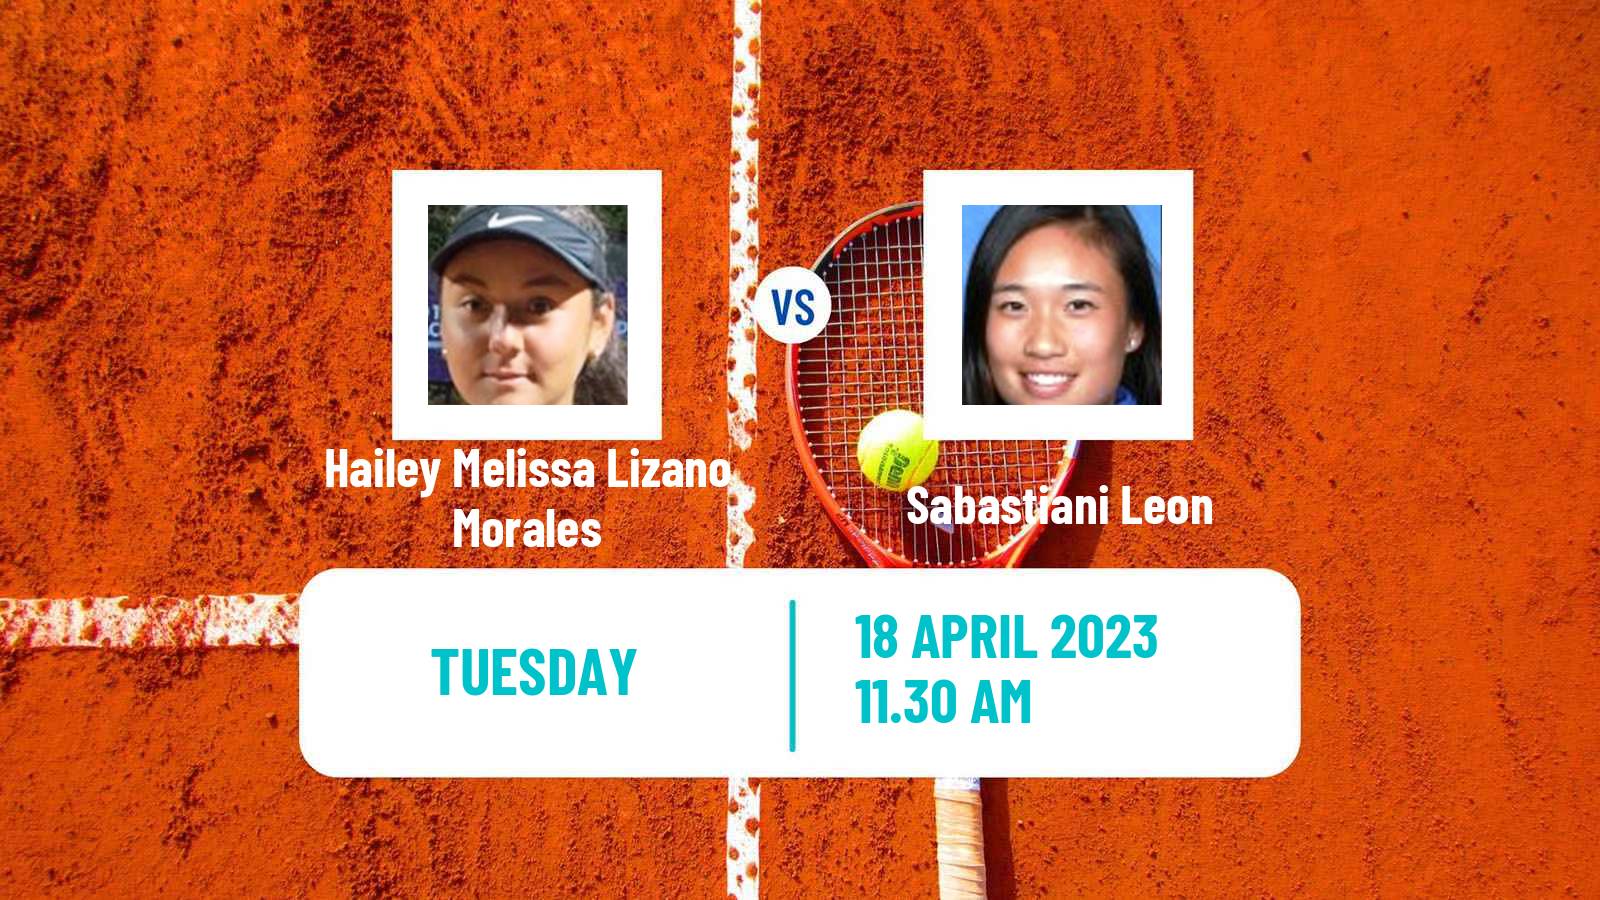 Tennis ITF Tournaments Hailey Melissa Lizano Morales - Sabastiani Leon